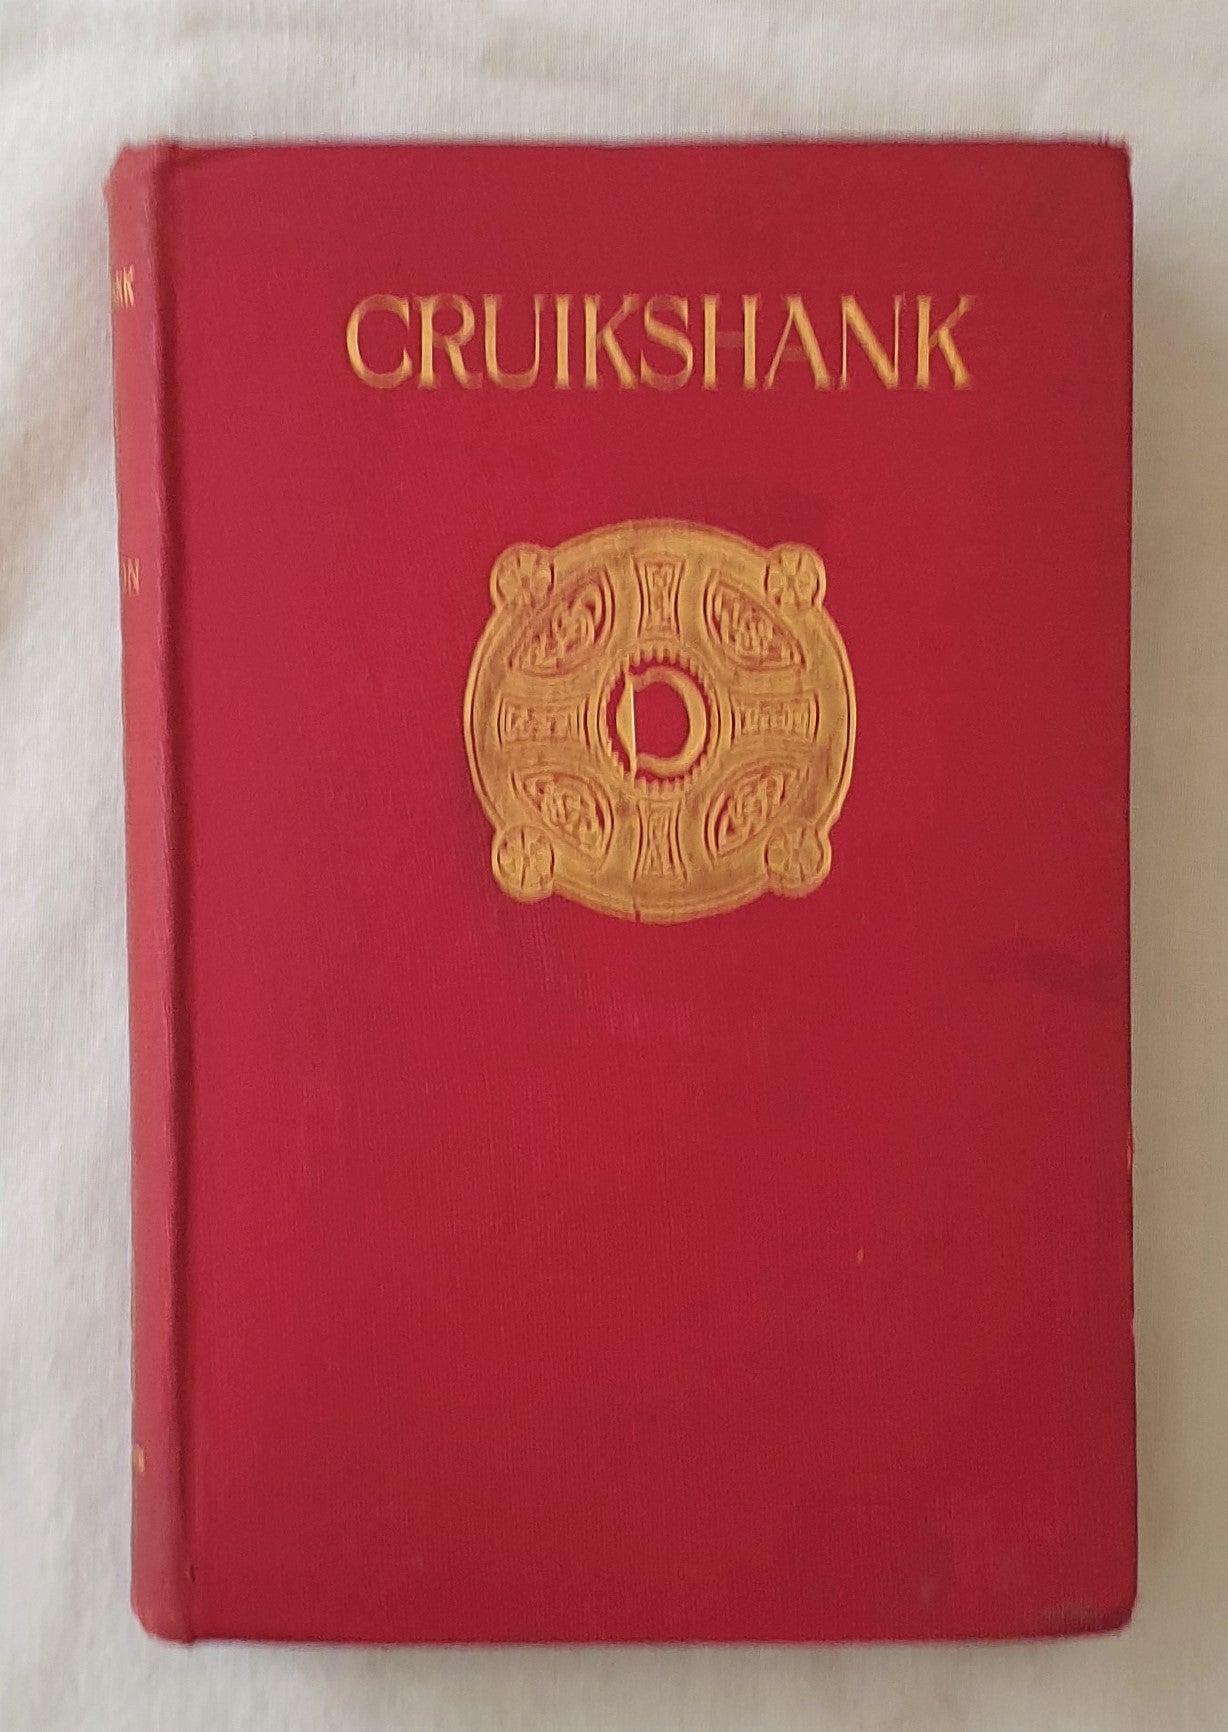 George Cruikshank by W. H. Chesson